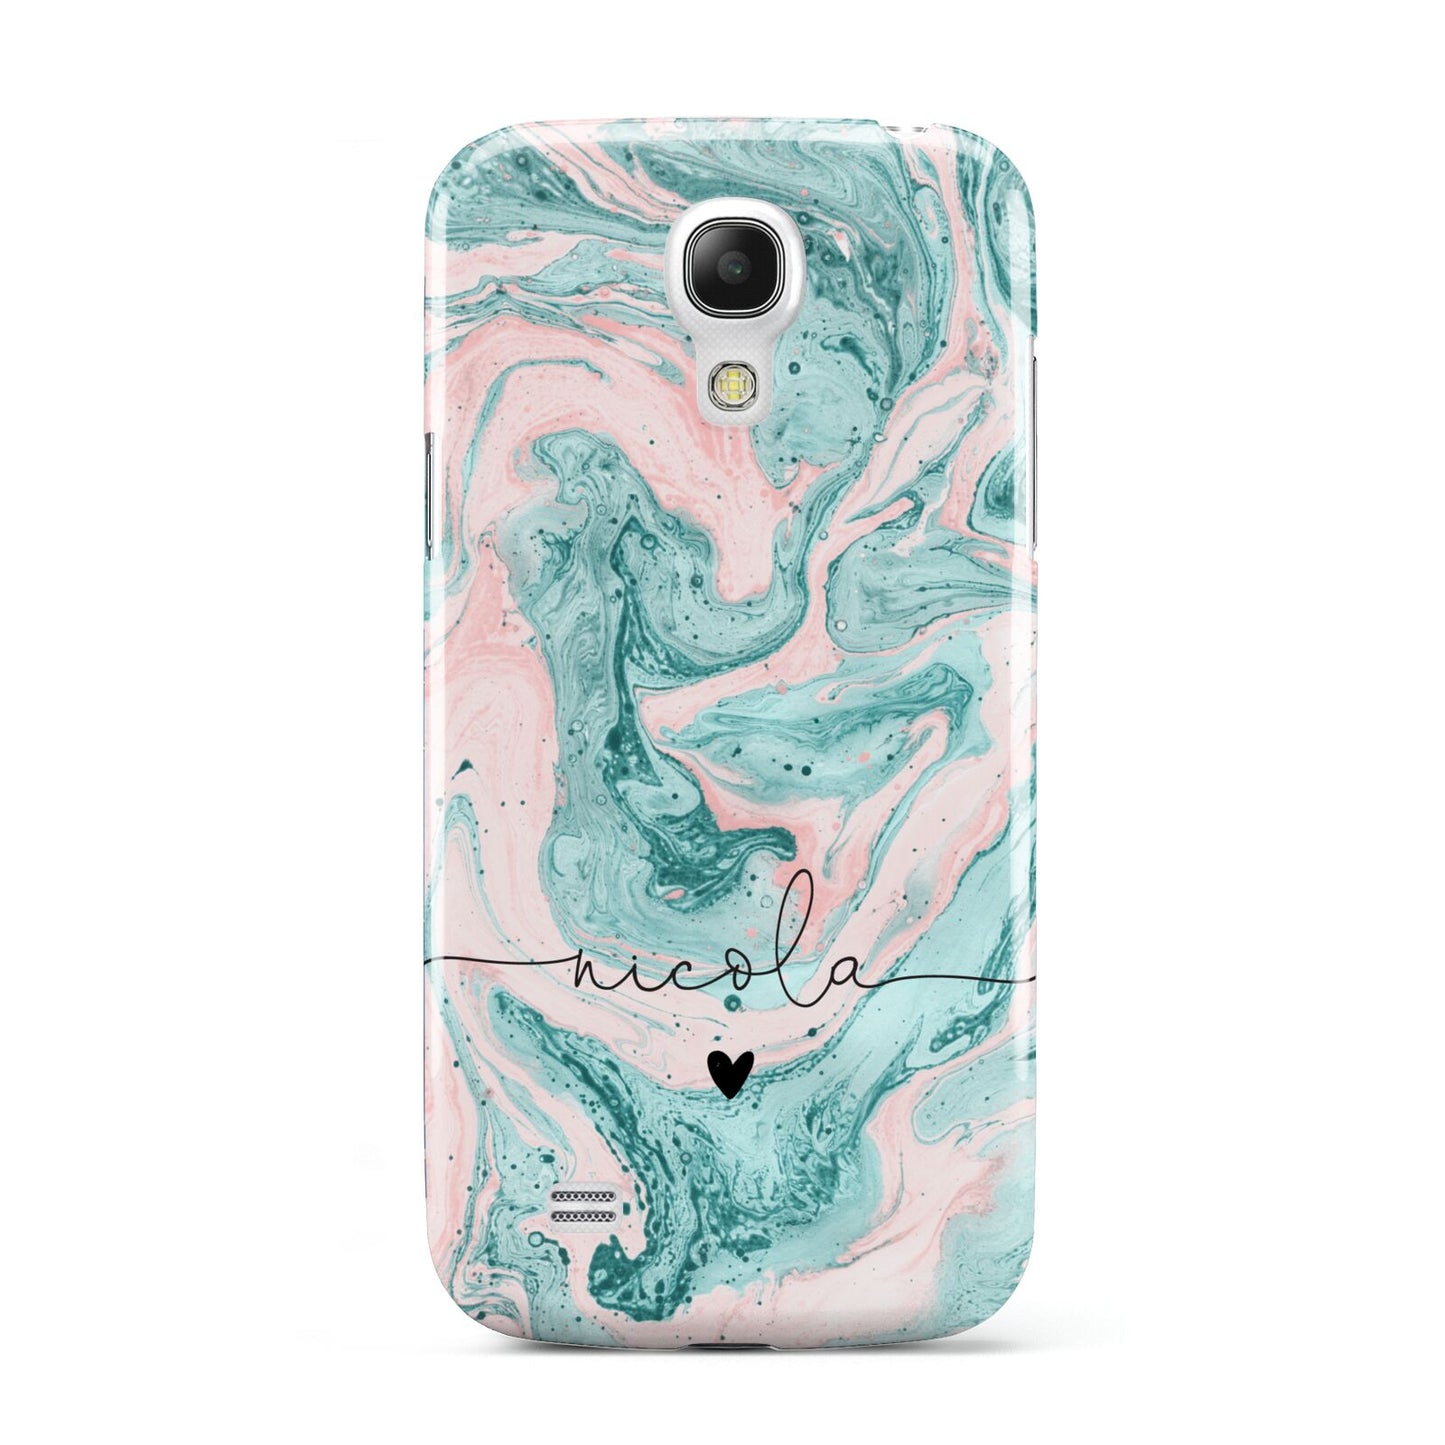 Personalised Name Green Swirl Marble Samsung Galaxy S4 Mini Case